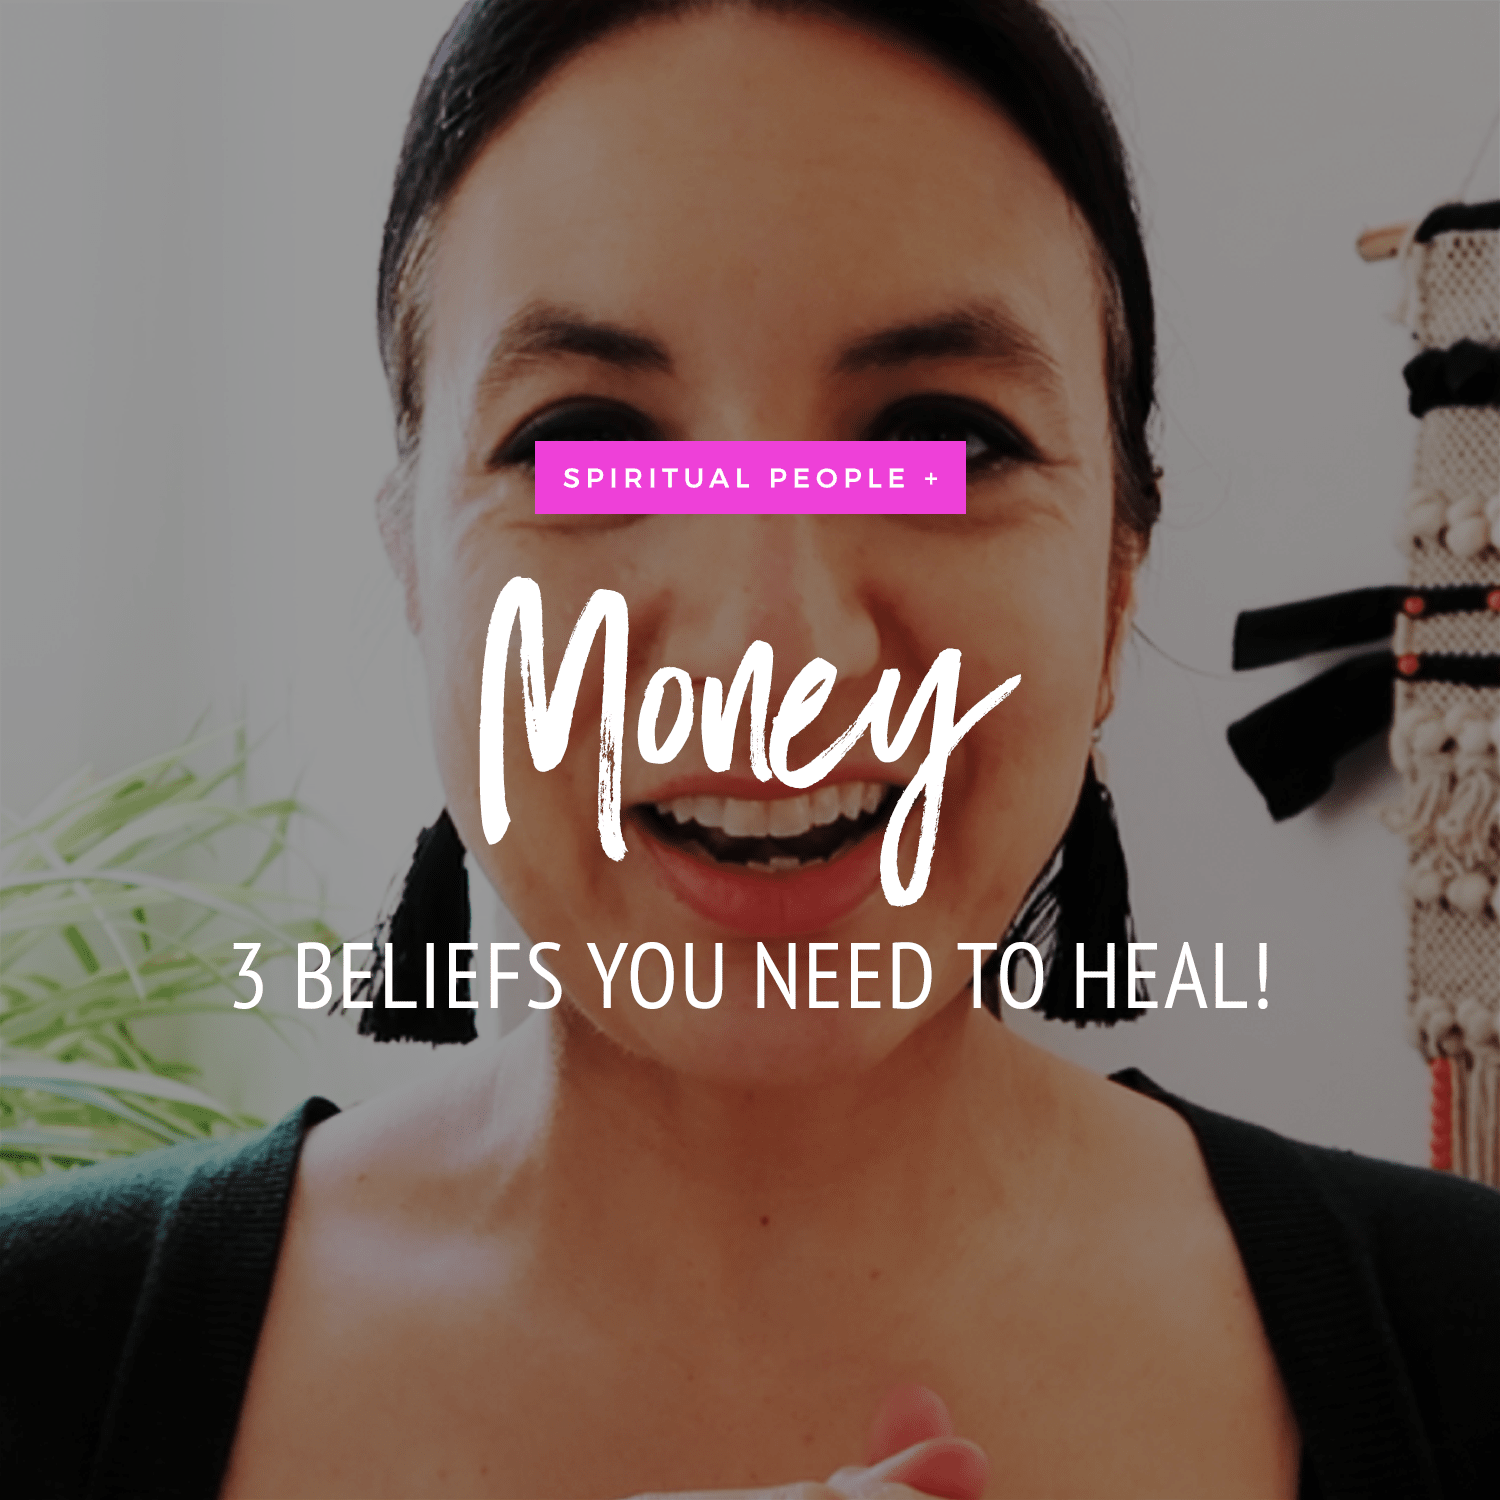 Spiritual People + Money: 3 Beliefs You Need To Heal